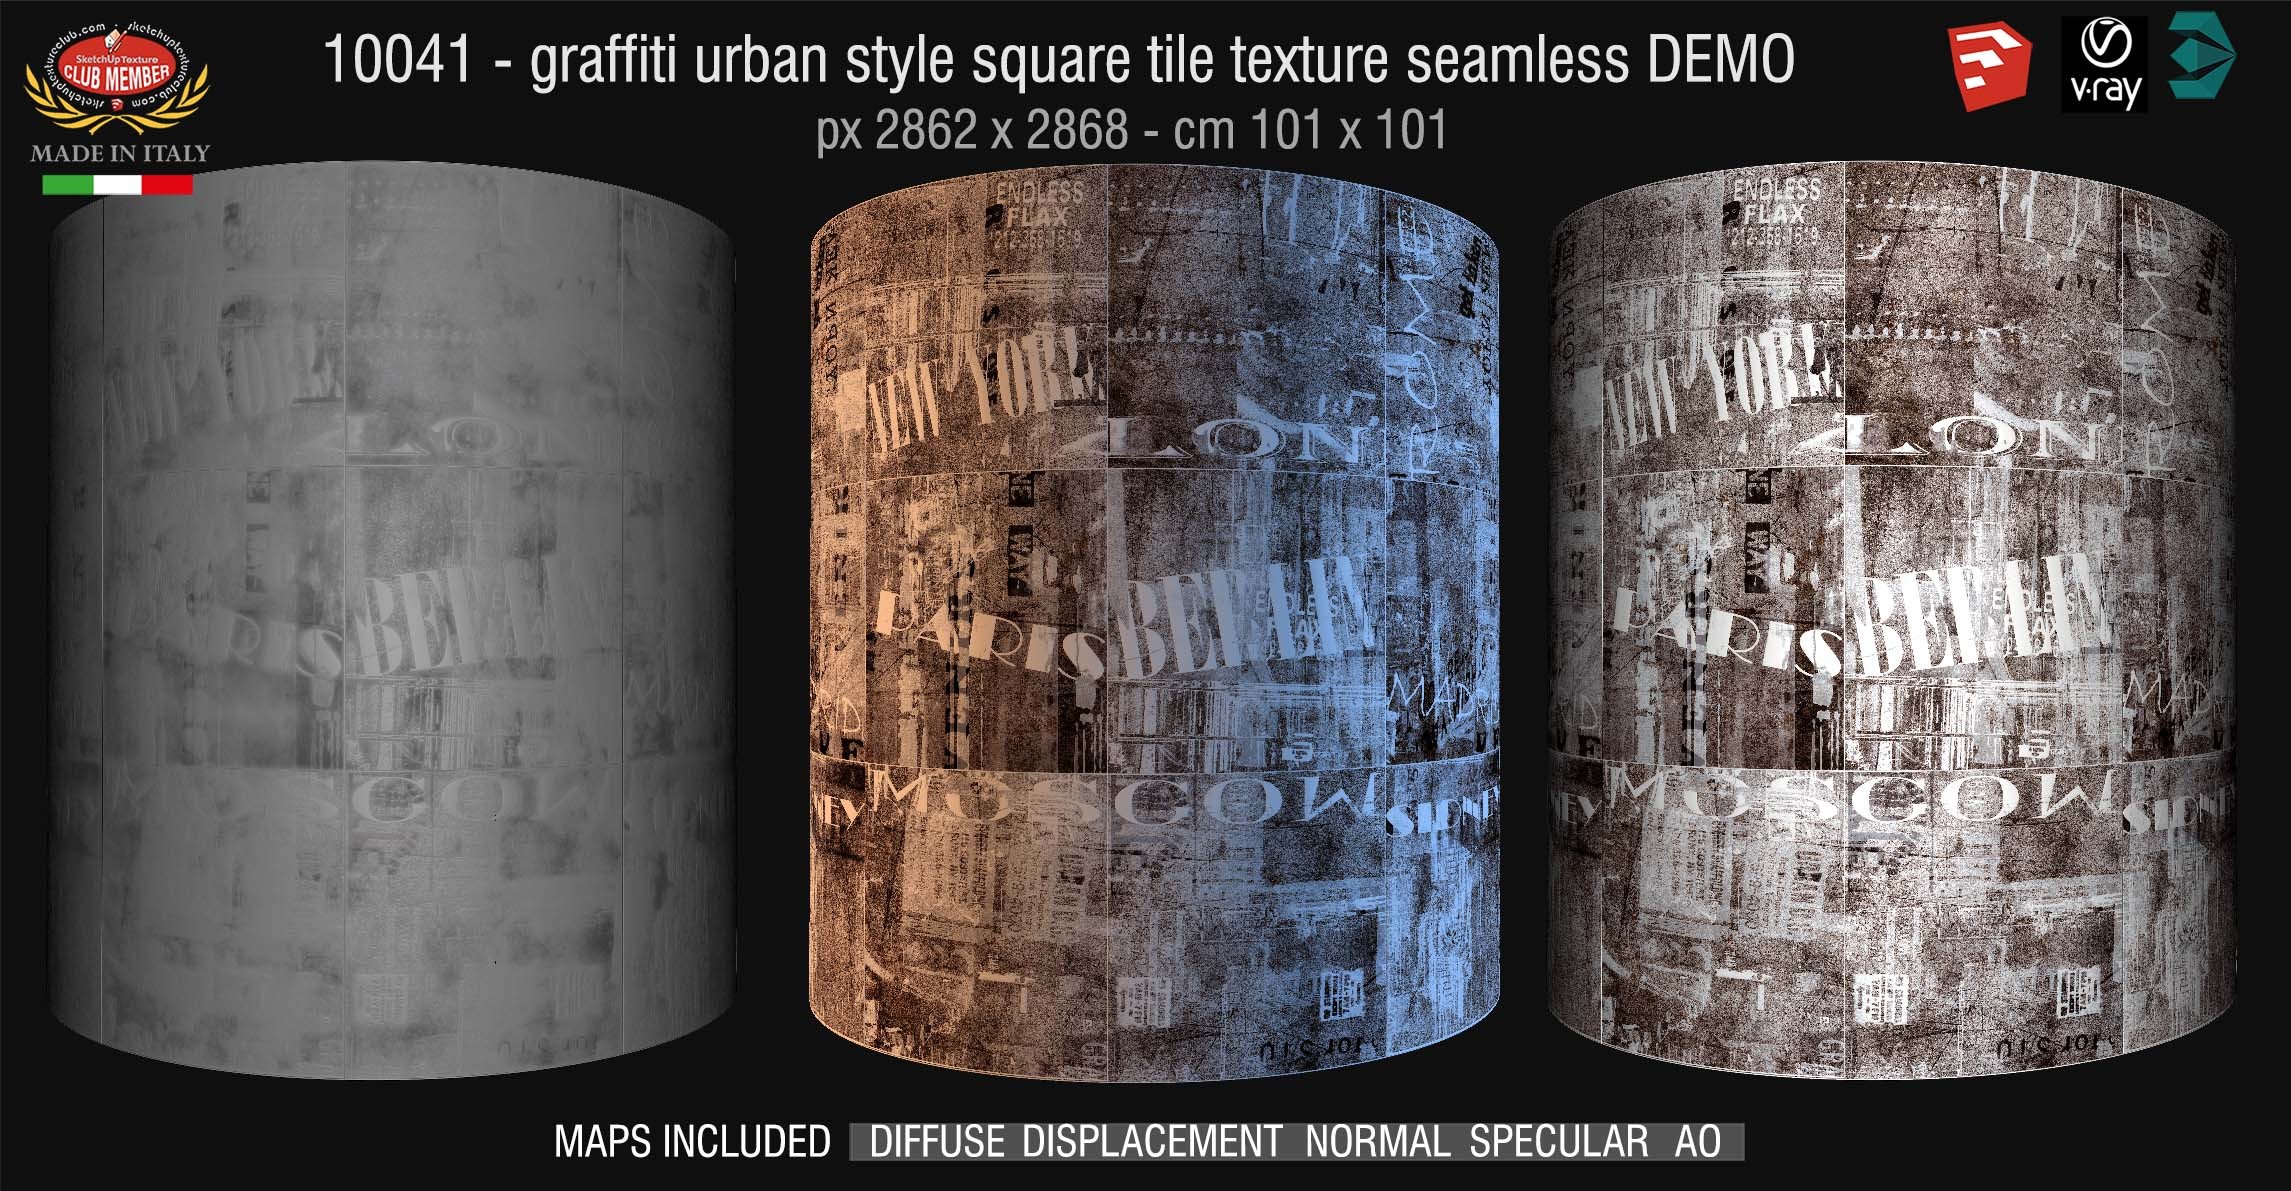 14041 HR Graffiti urban style square tile texture seamless + maps DEMO